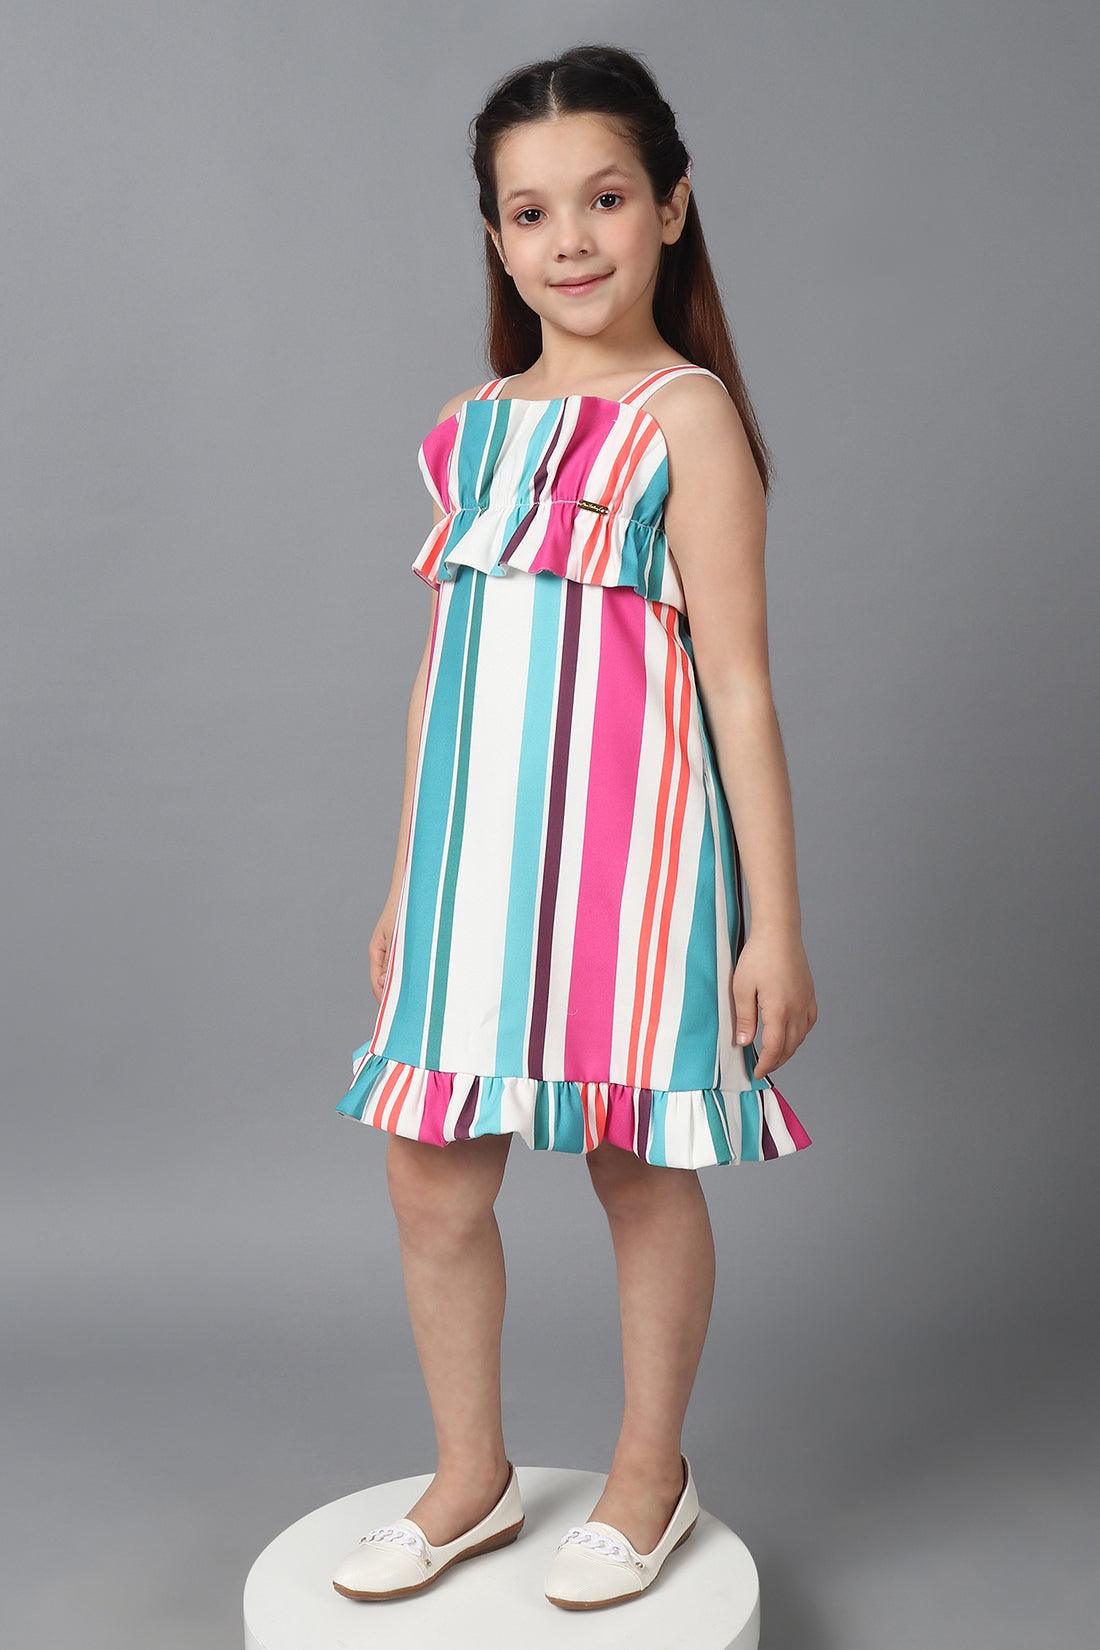 One Friday Kids Girls Multicolored Striped Sleeveless Dress